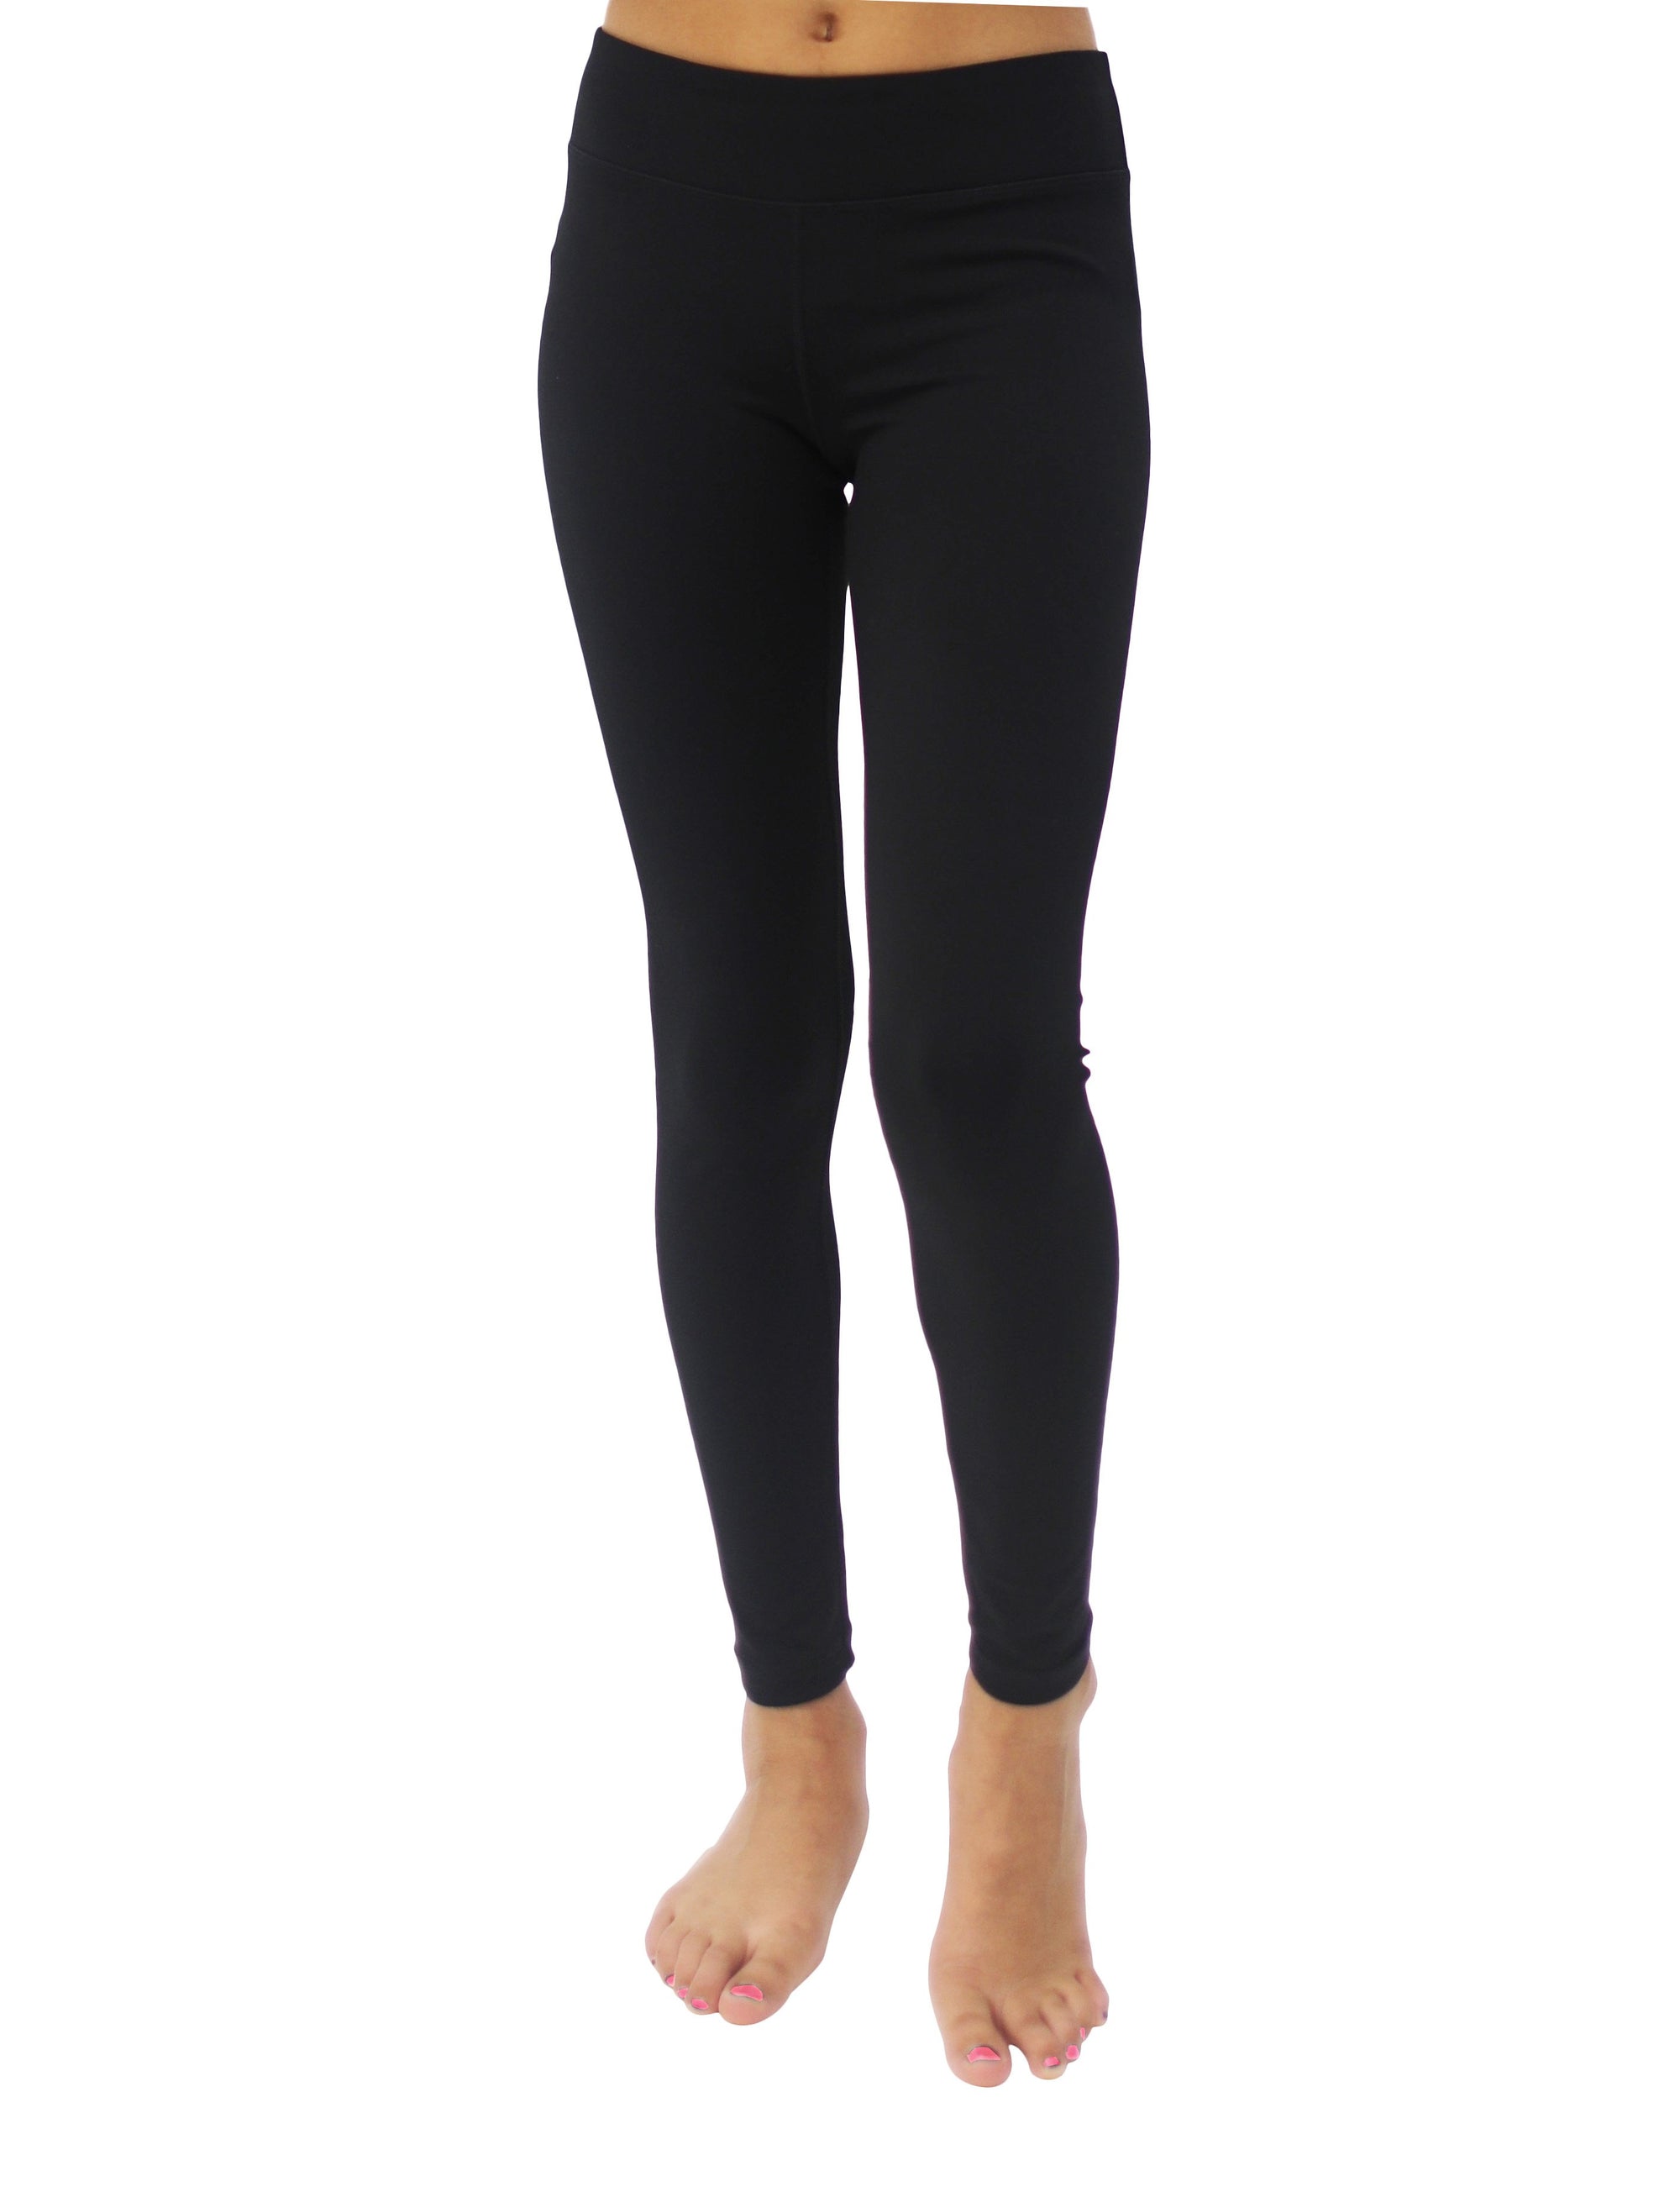 NZSALE  90 Degree by Reflex 90 Degree By Reflex Women's Pants Leggings -  Color: Black